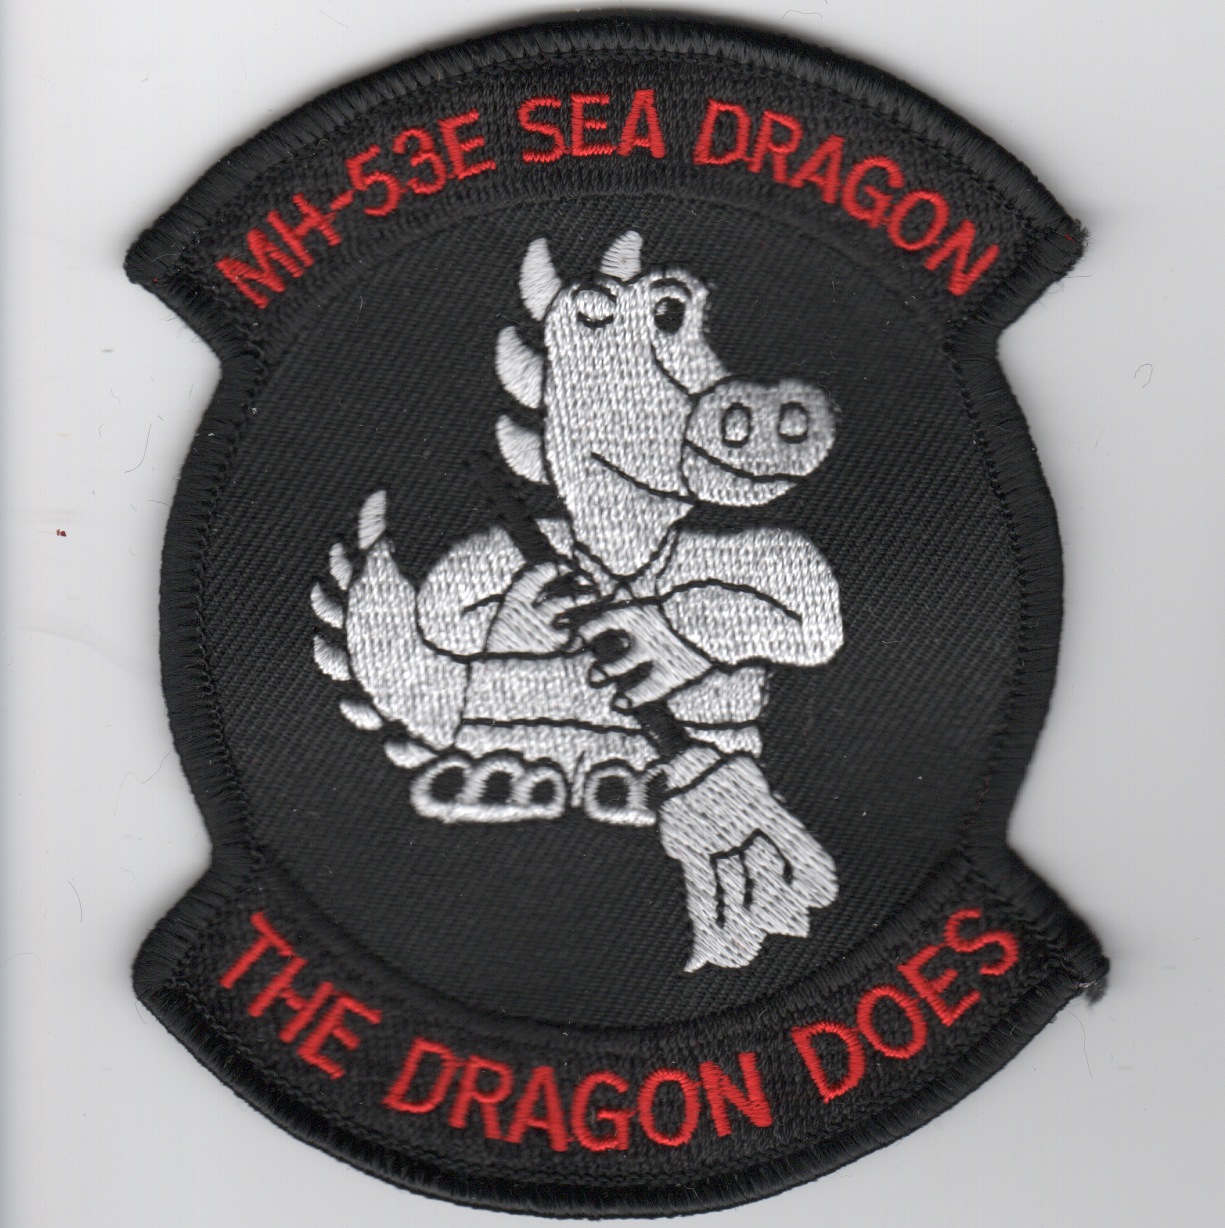 MH-53E 'The Dragon Does' (Black)